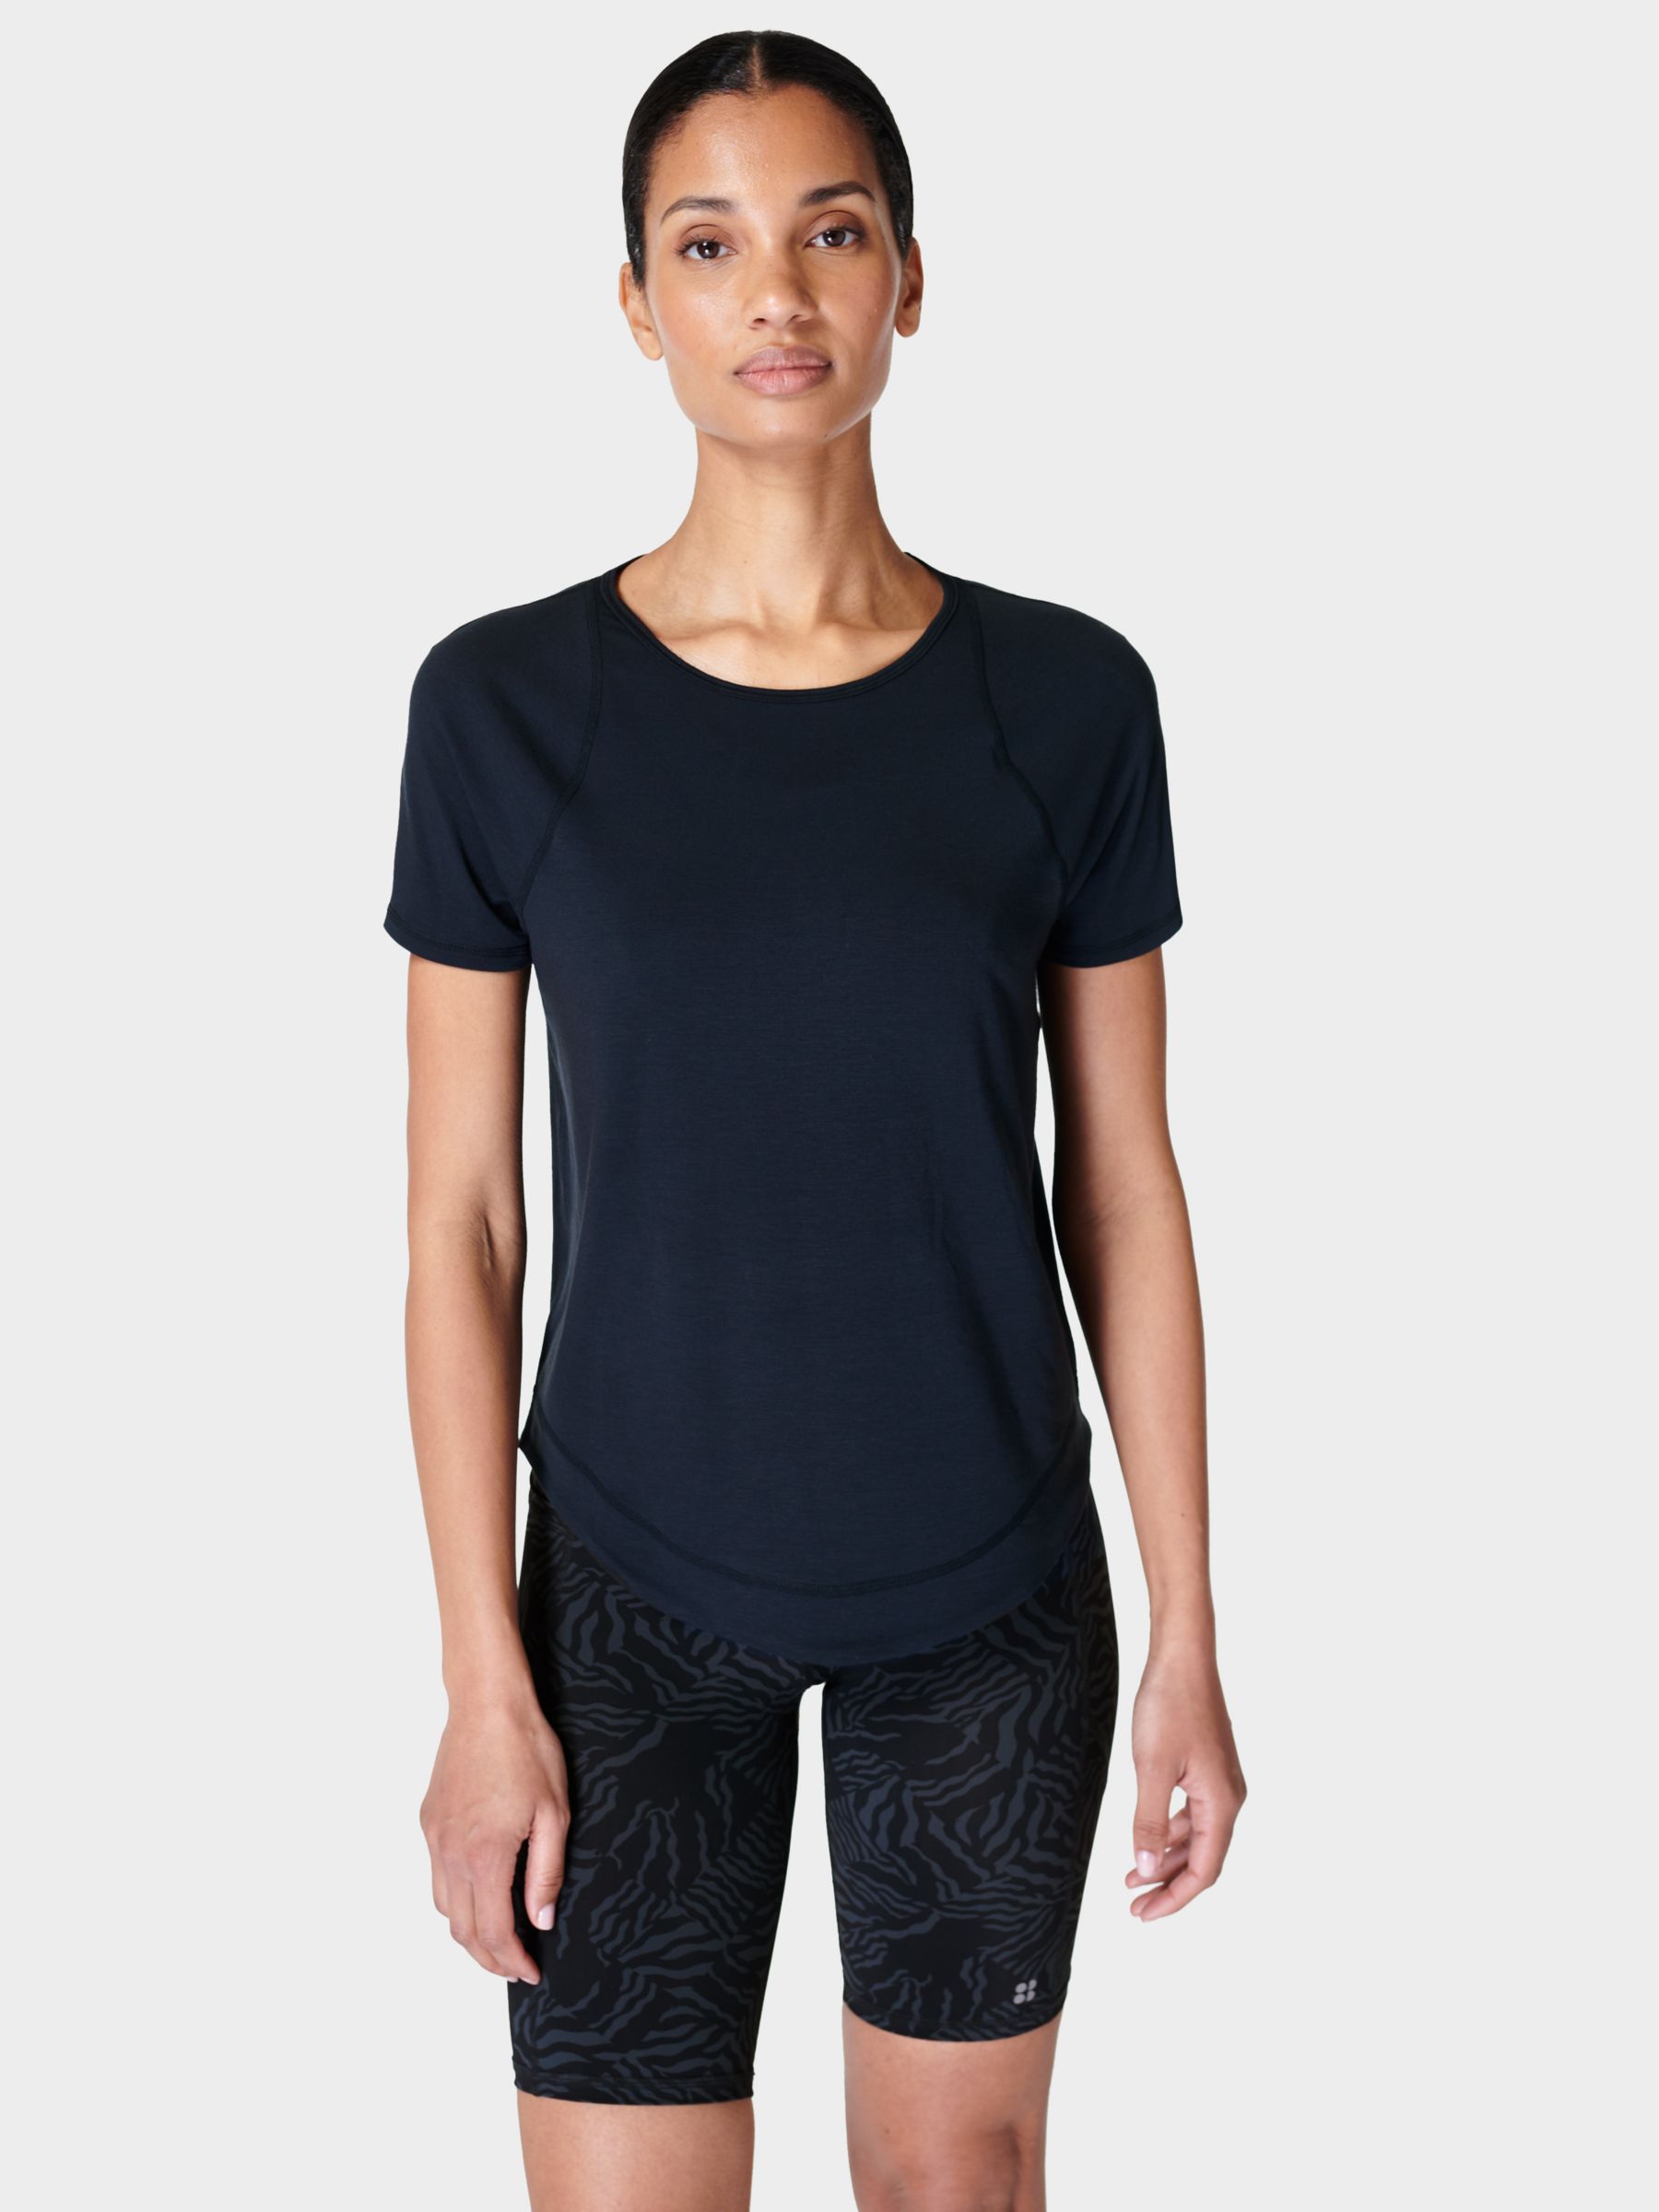 Sweaty Betty Breathe Easy Boxy T-Shirt, Black at John Lewis & Partners